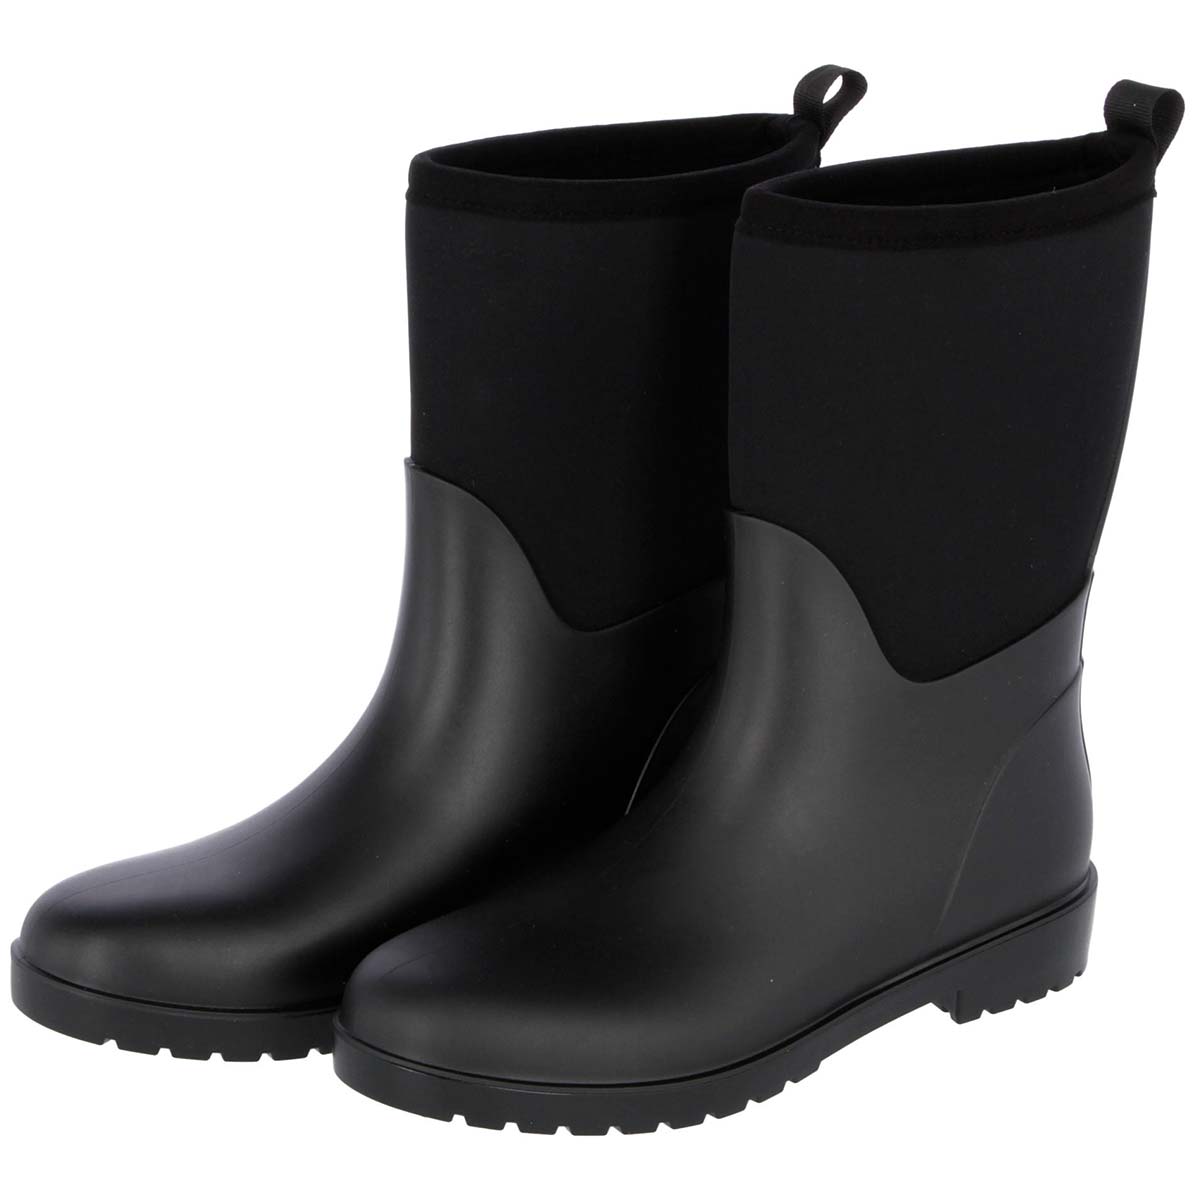 Boots NeoLite for sale - flexible & waterproof